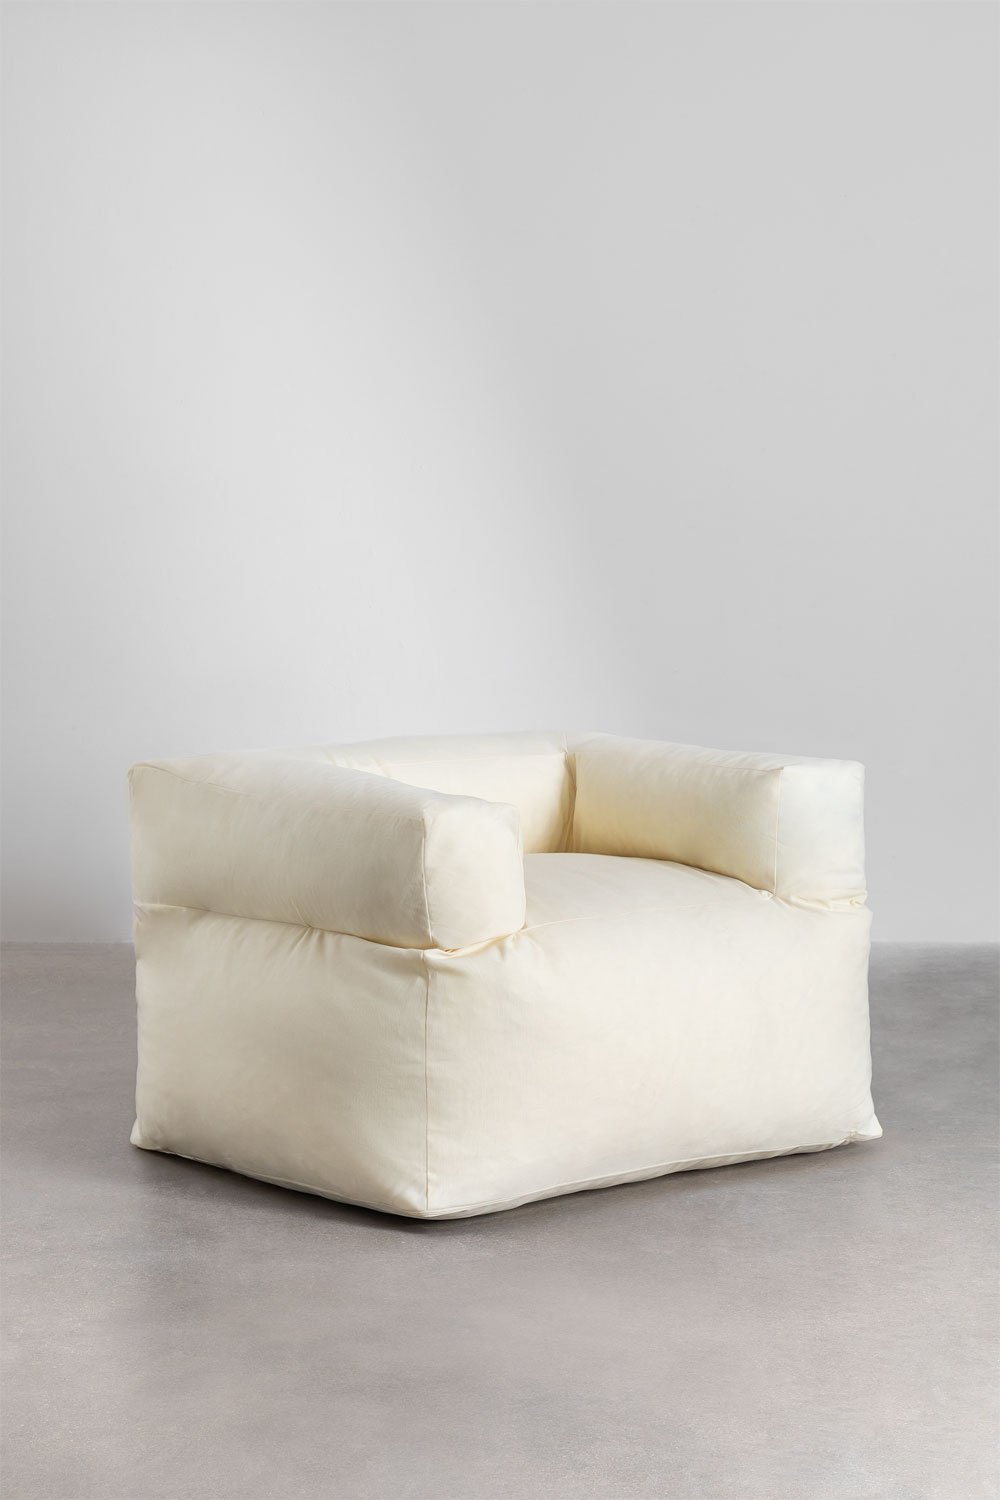 Darmian armchair, gallery image 1